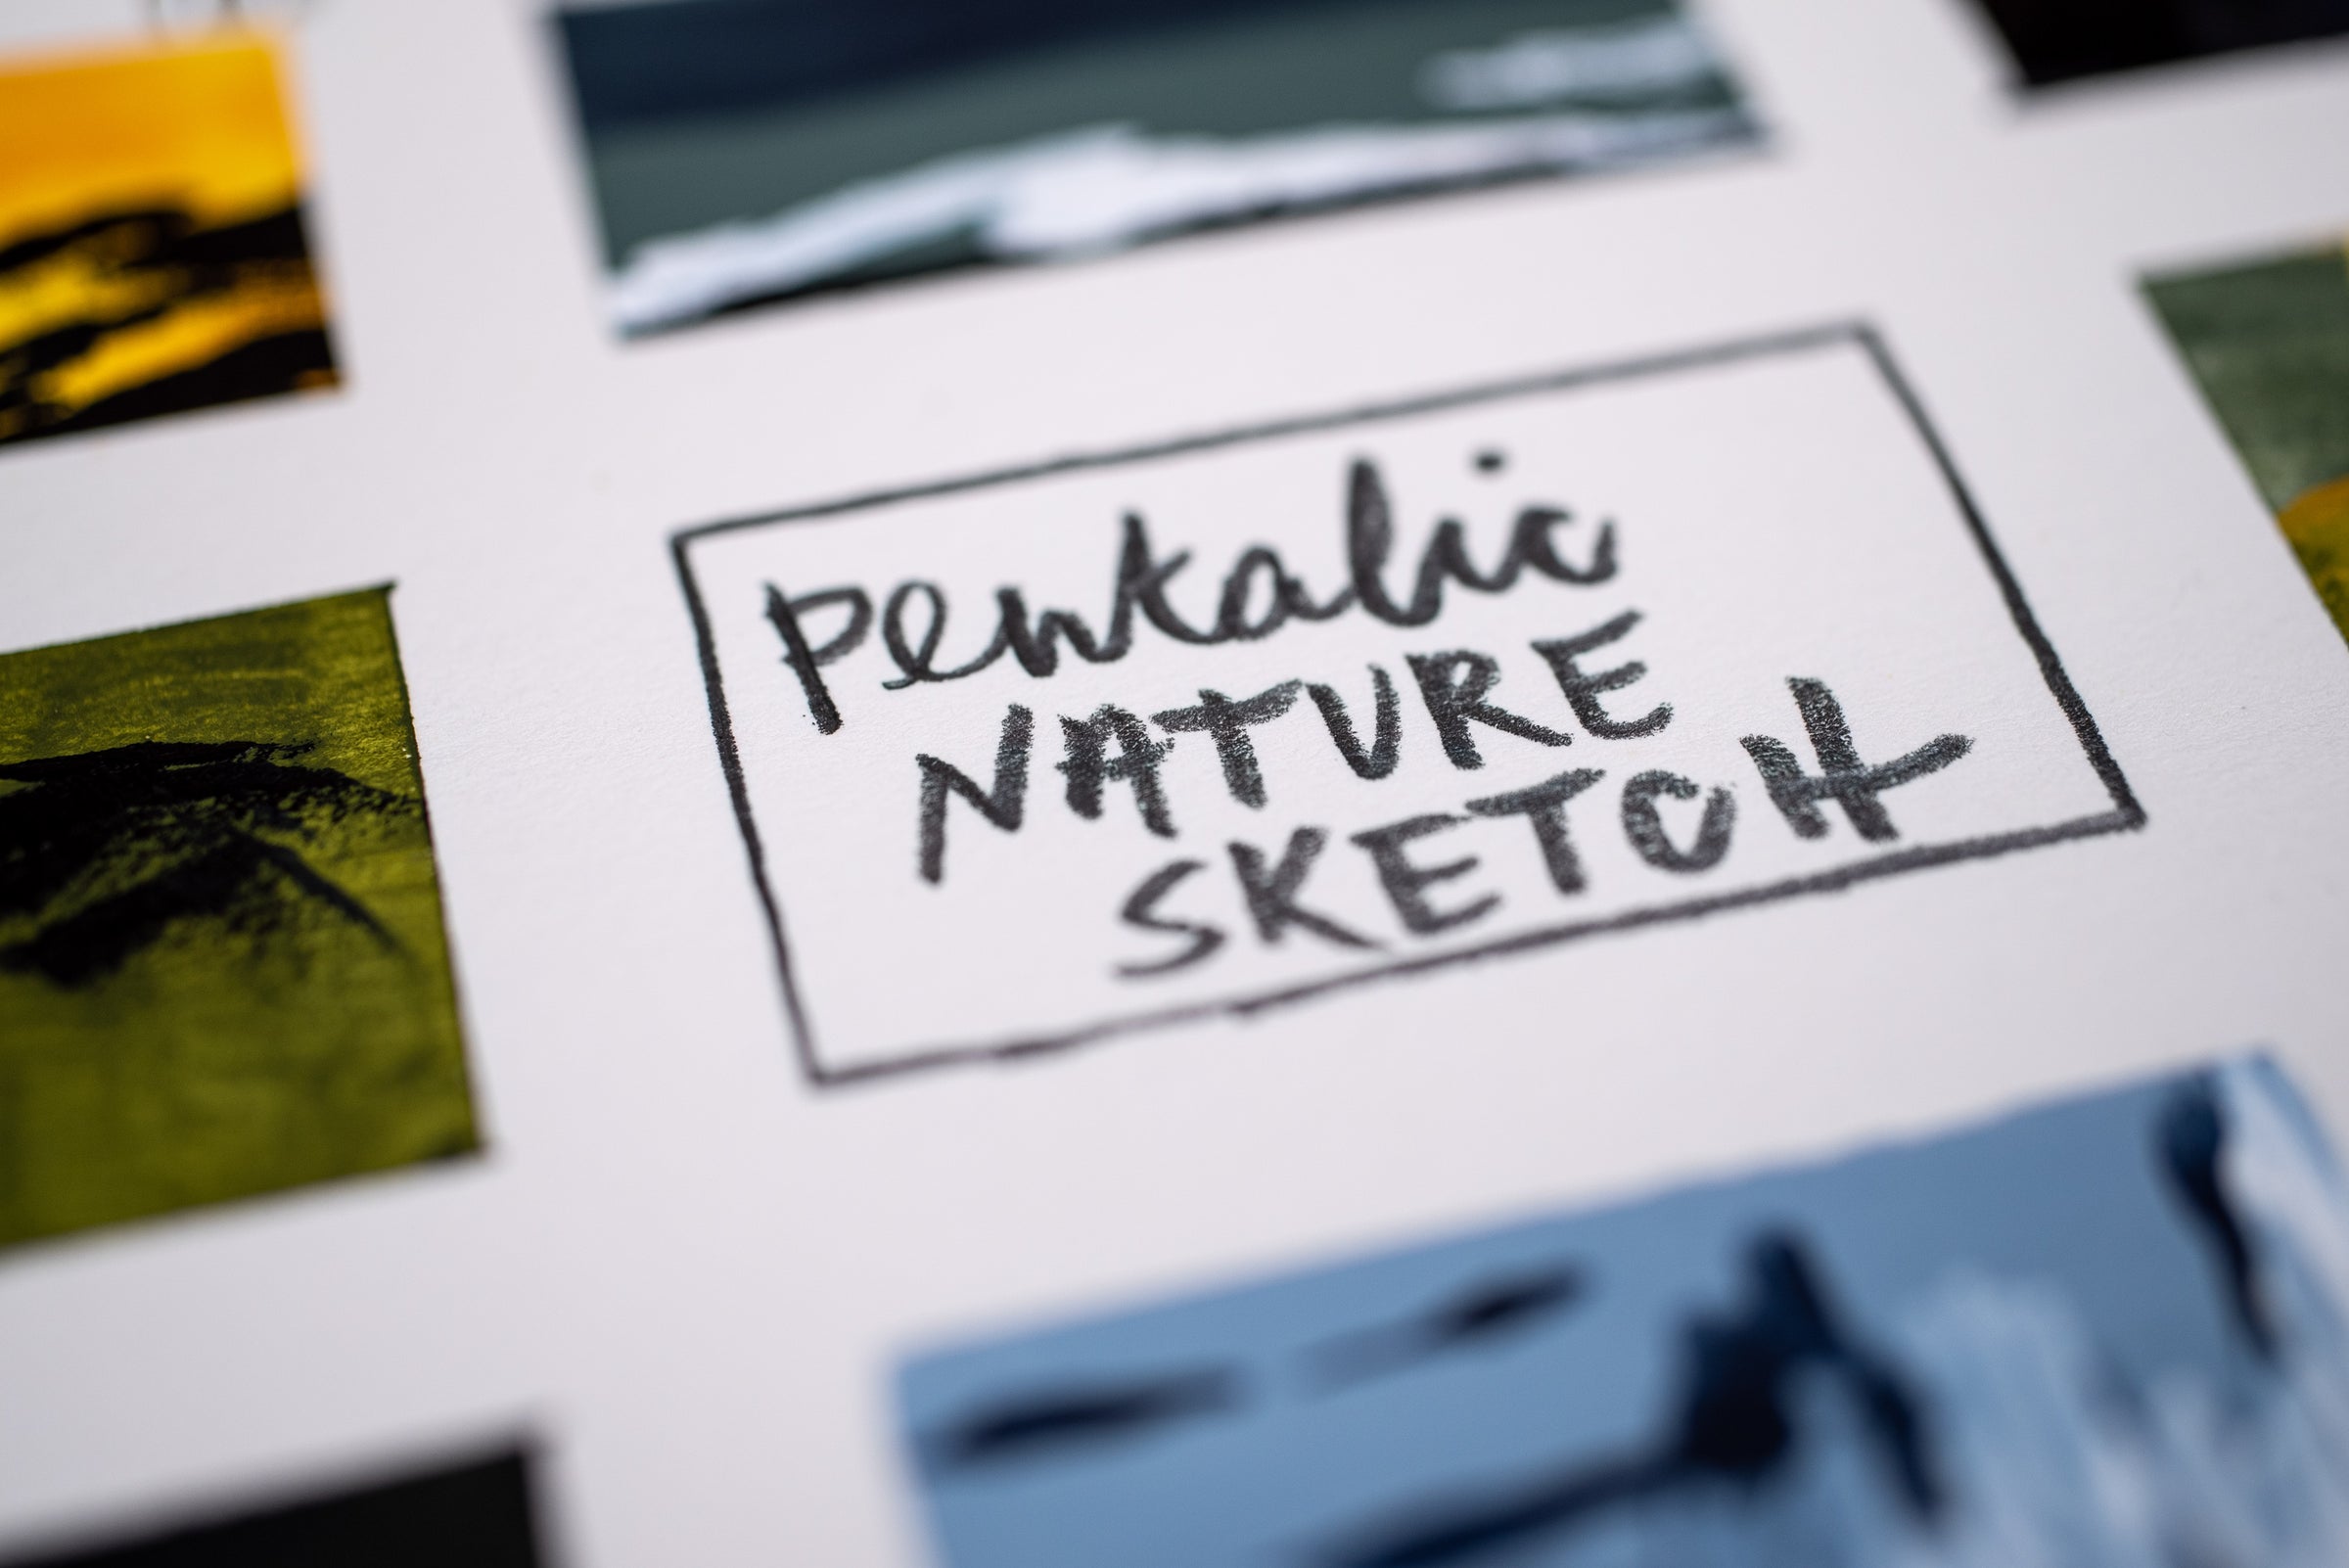 Pentalic Nature Sketch Pad 11 x 8.5